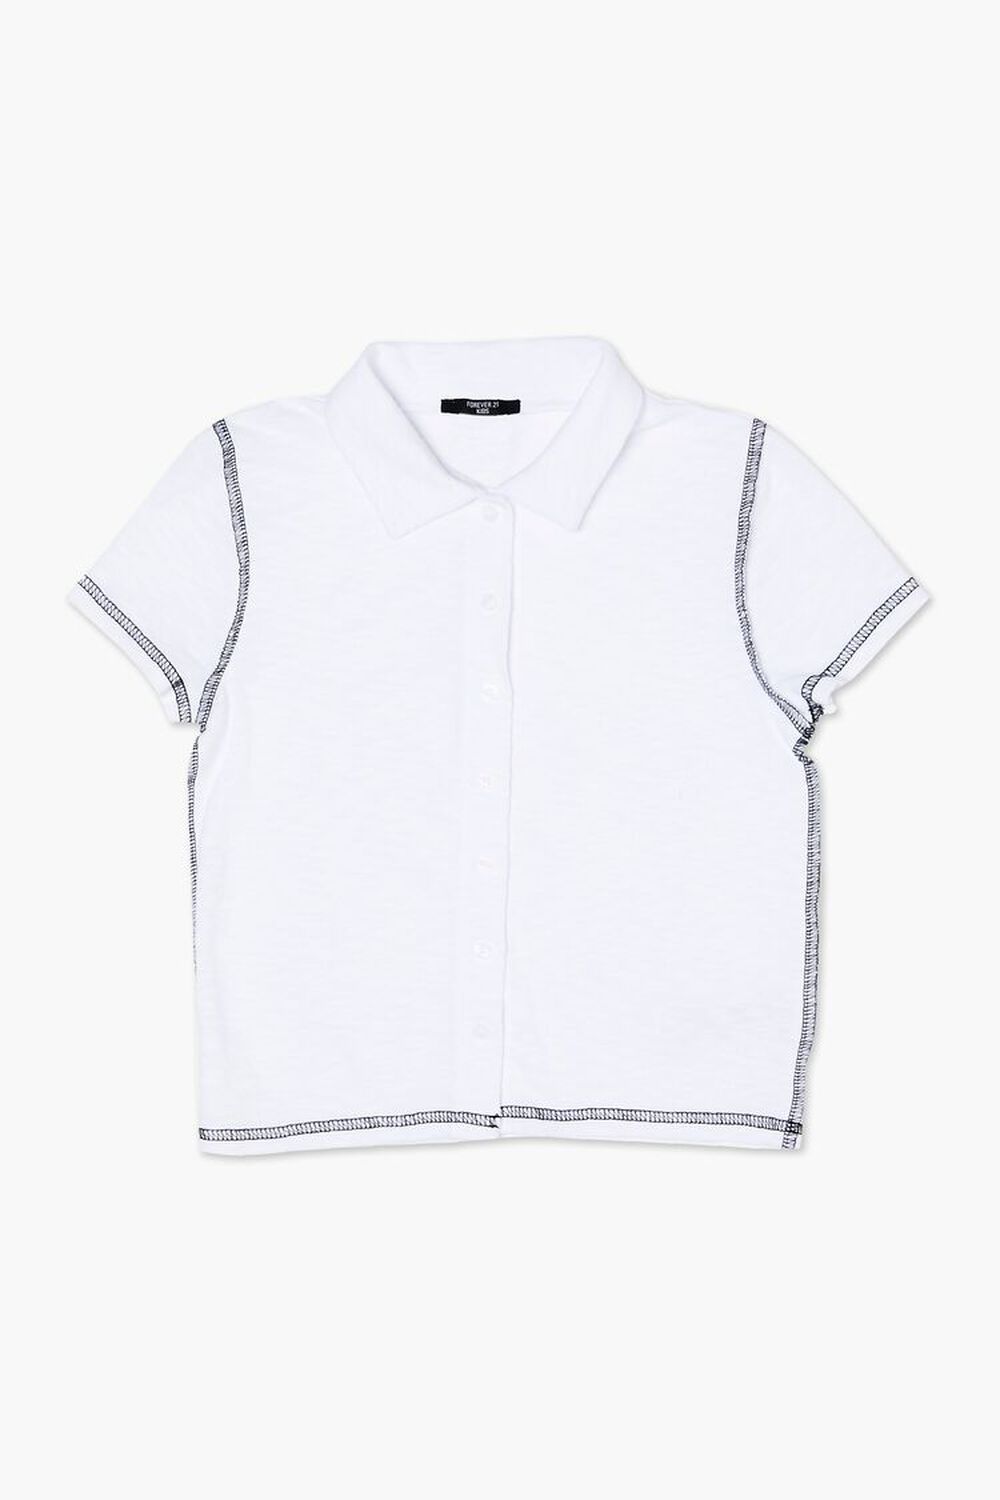 WHITE Girls Button-Front Shirt (Kids), image 1